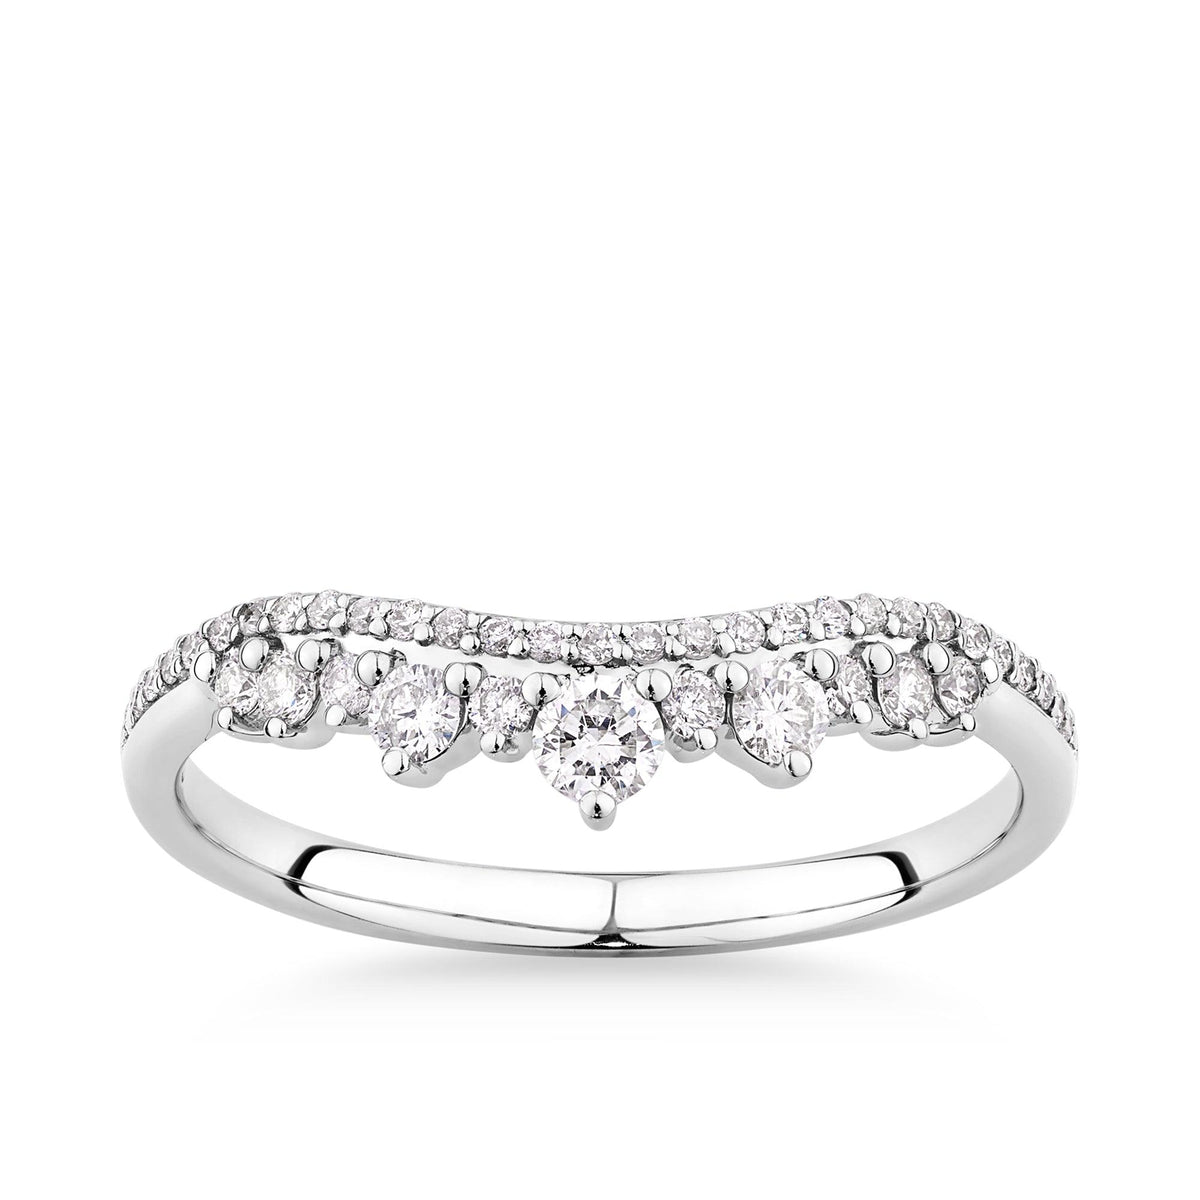 0.913ct TW Diamond Dress Ring in 9ct White Gold - Wallace Bishop